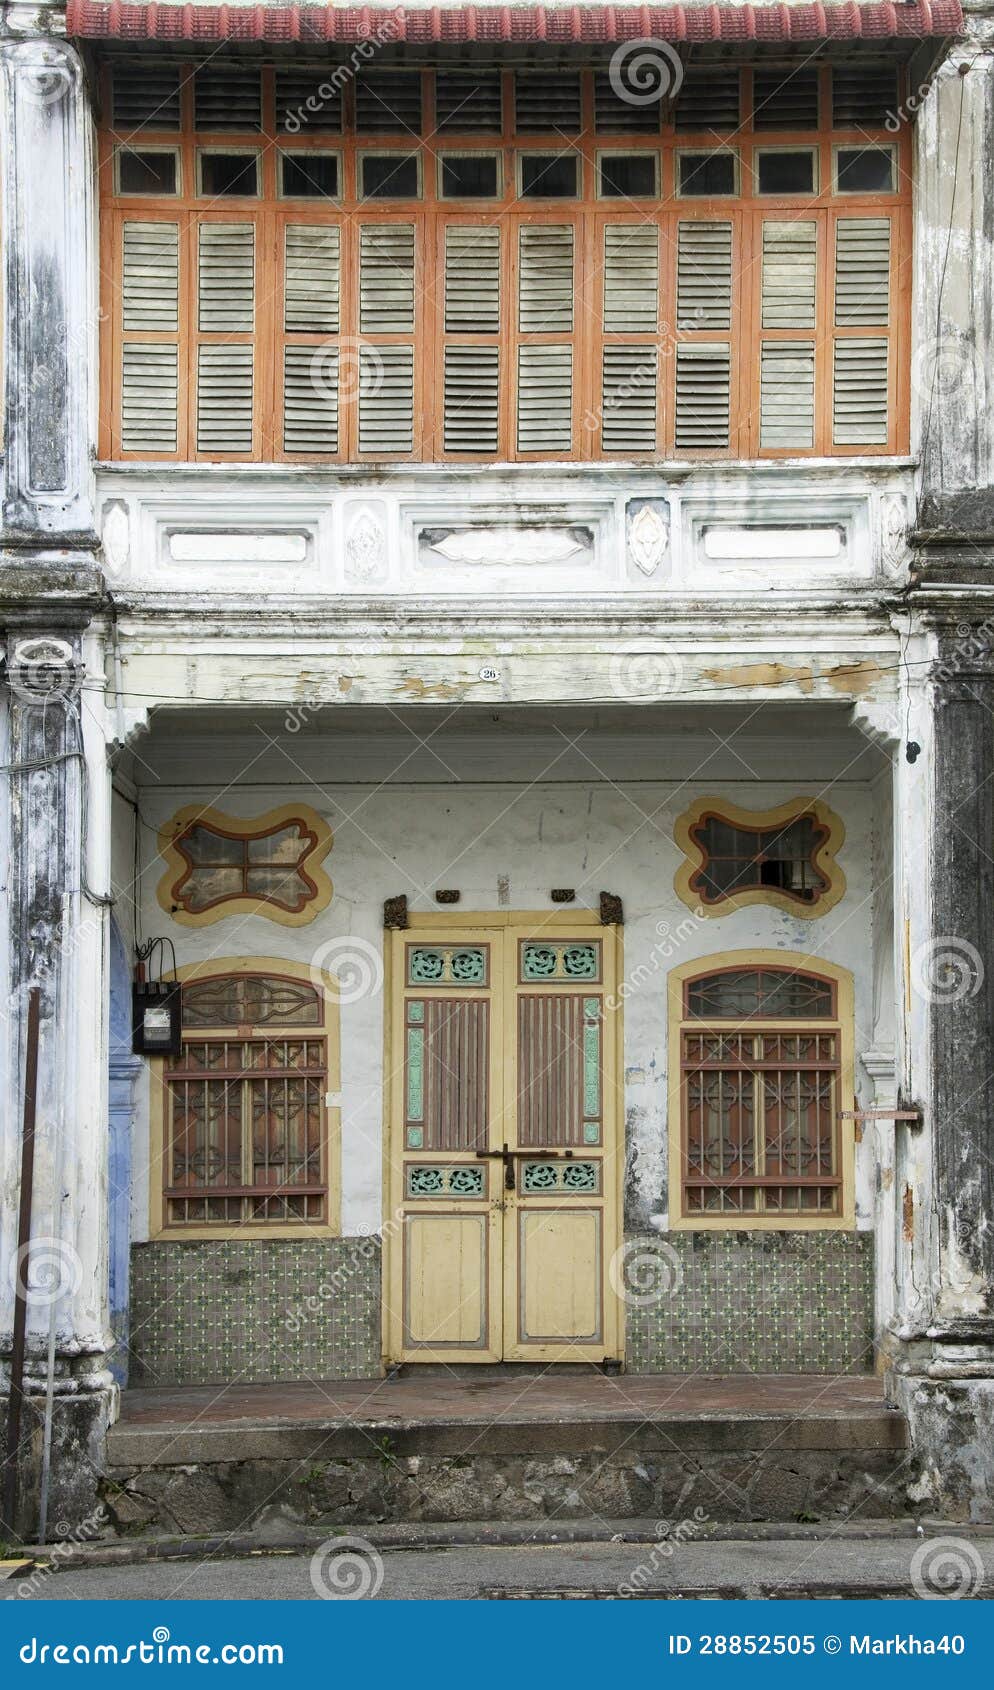 Heritage House, Penang, Malaysia Stock Image - Image of step, ornate